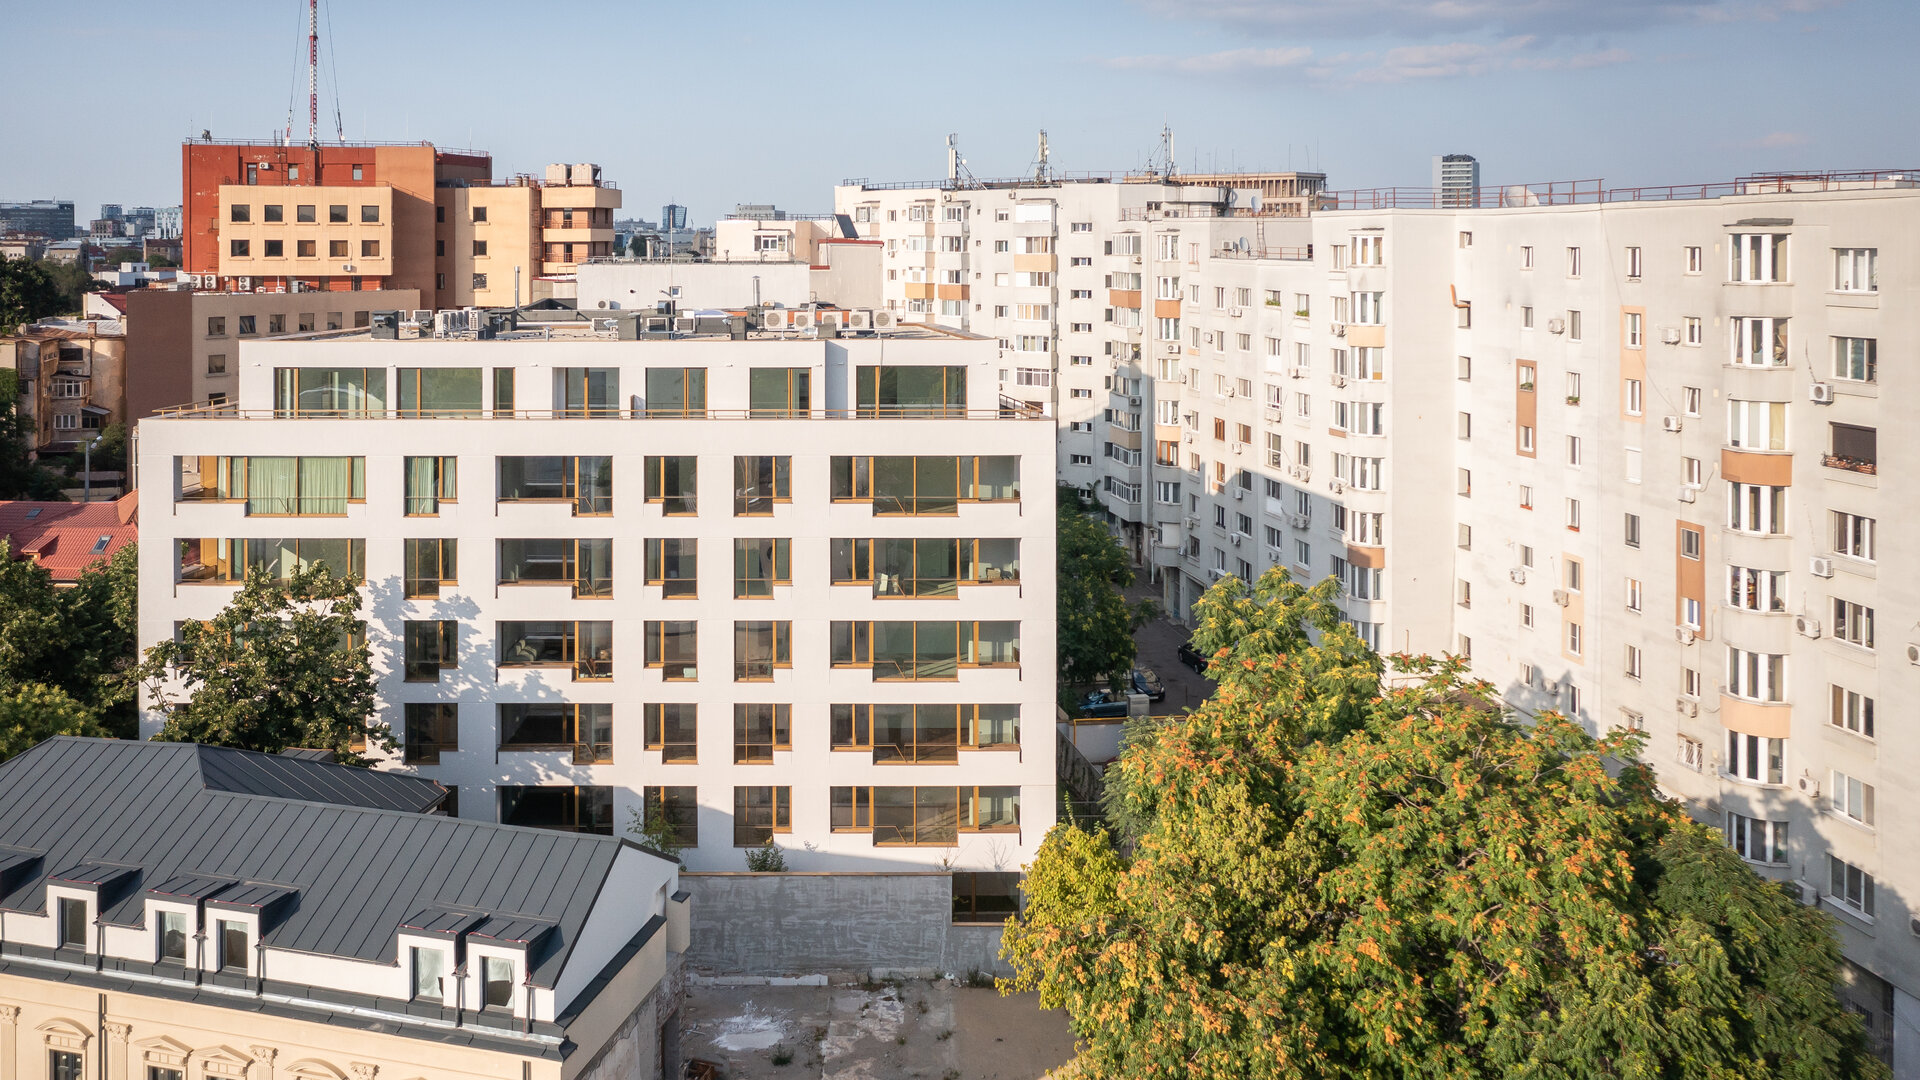 Apartment Building on Virgiliu Street